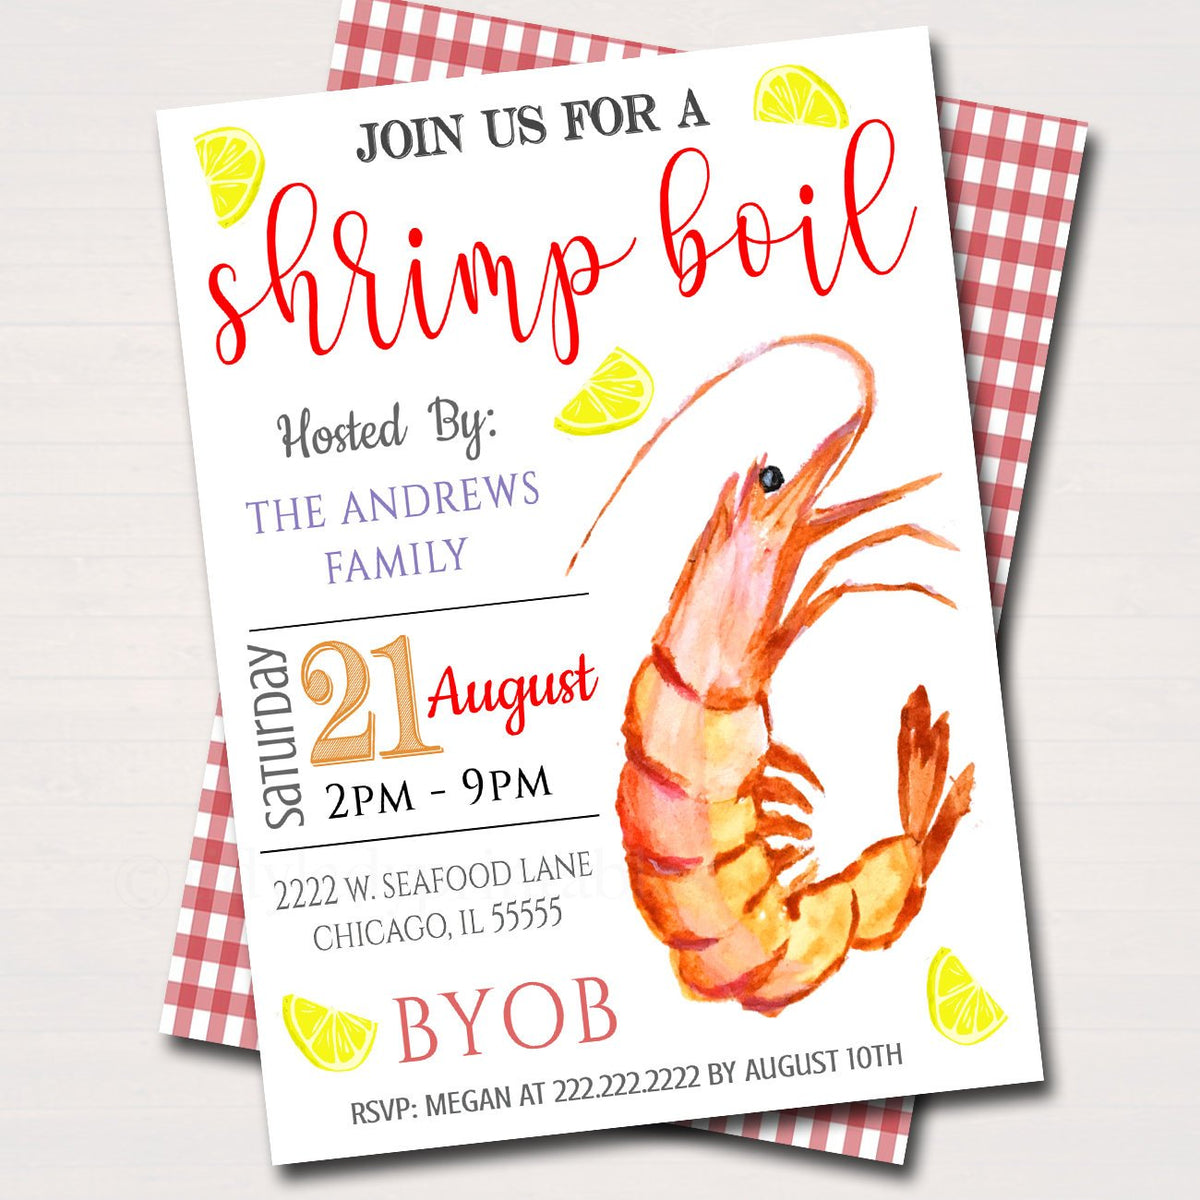 shrimp-boil-invitation-low-country-company-picnic-family-picnic-bbq